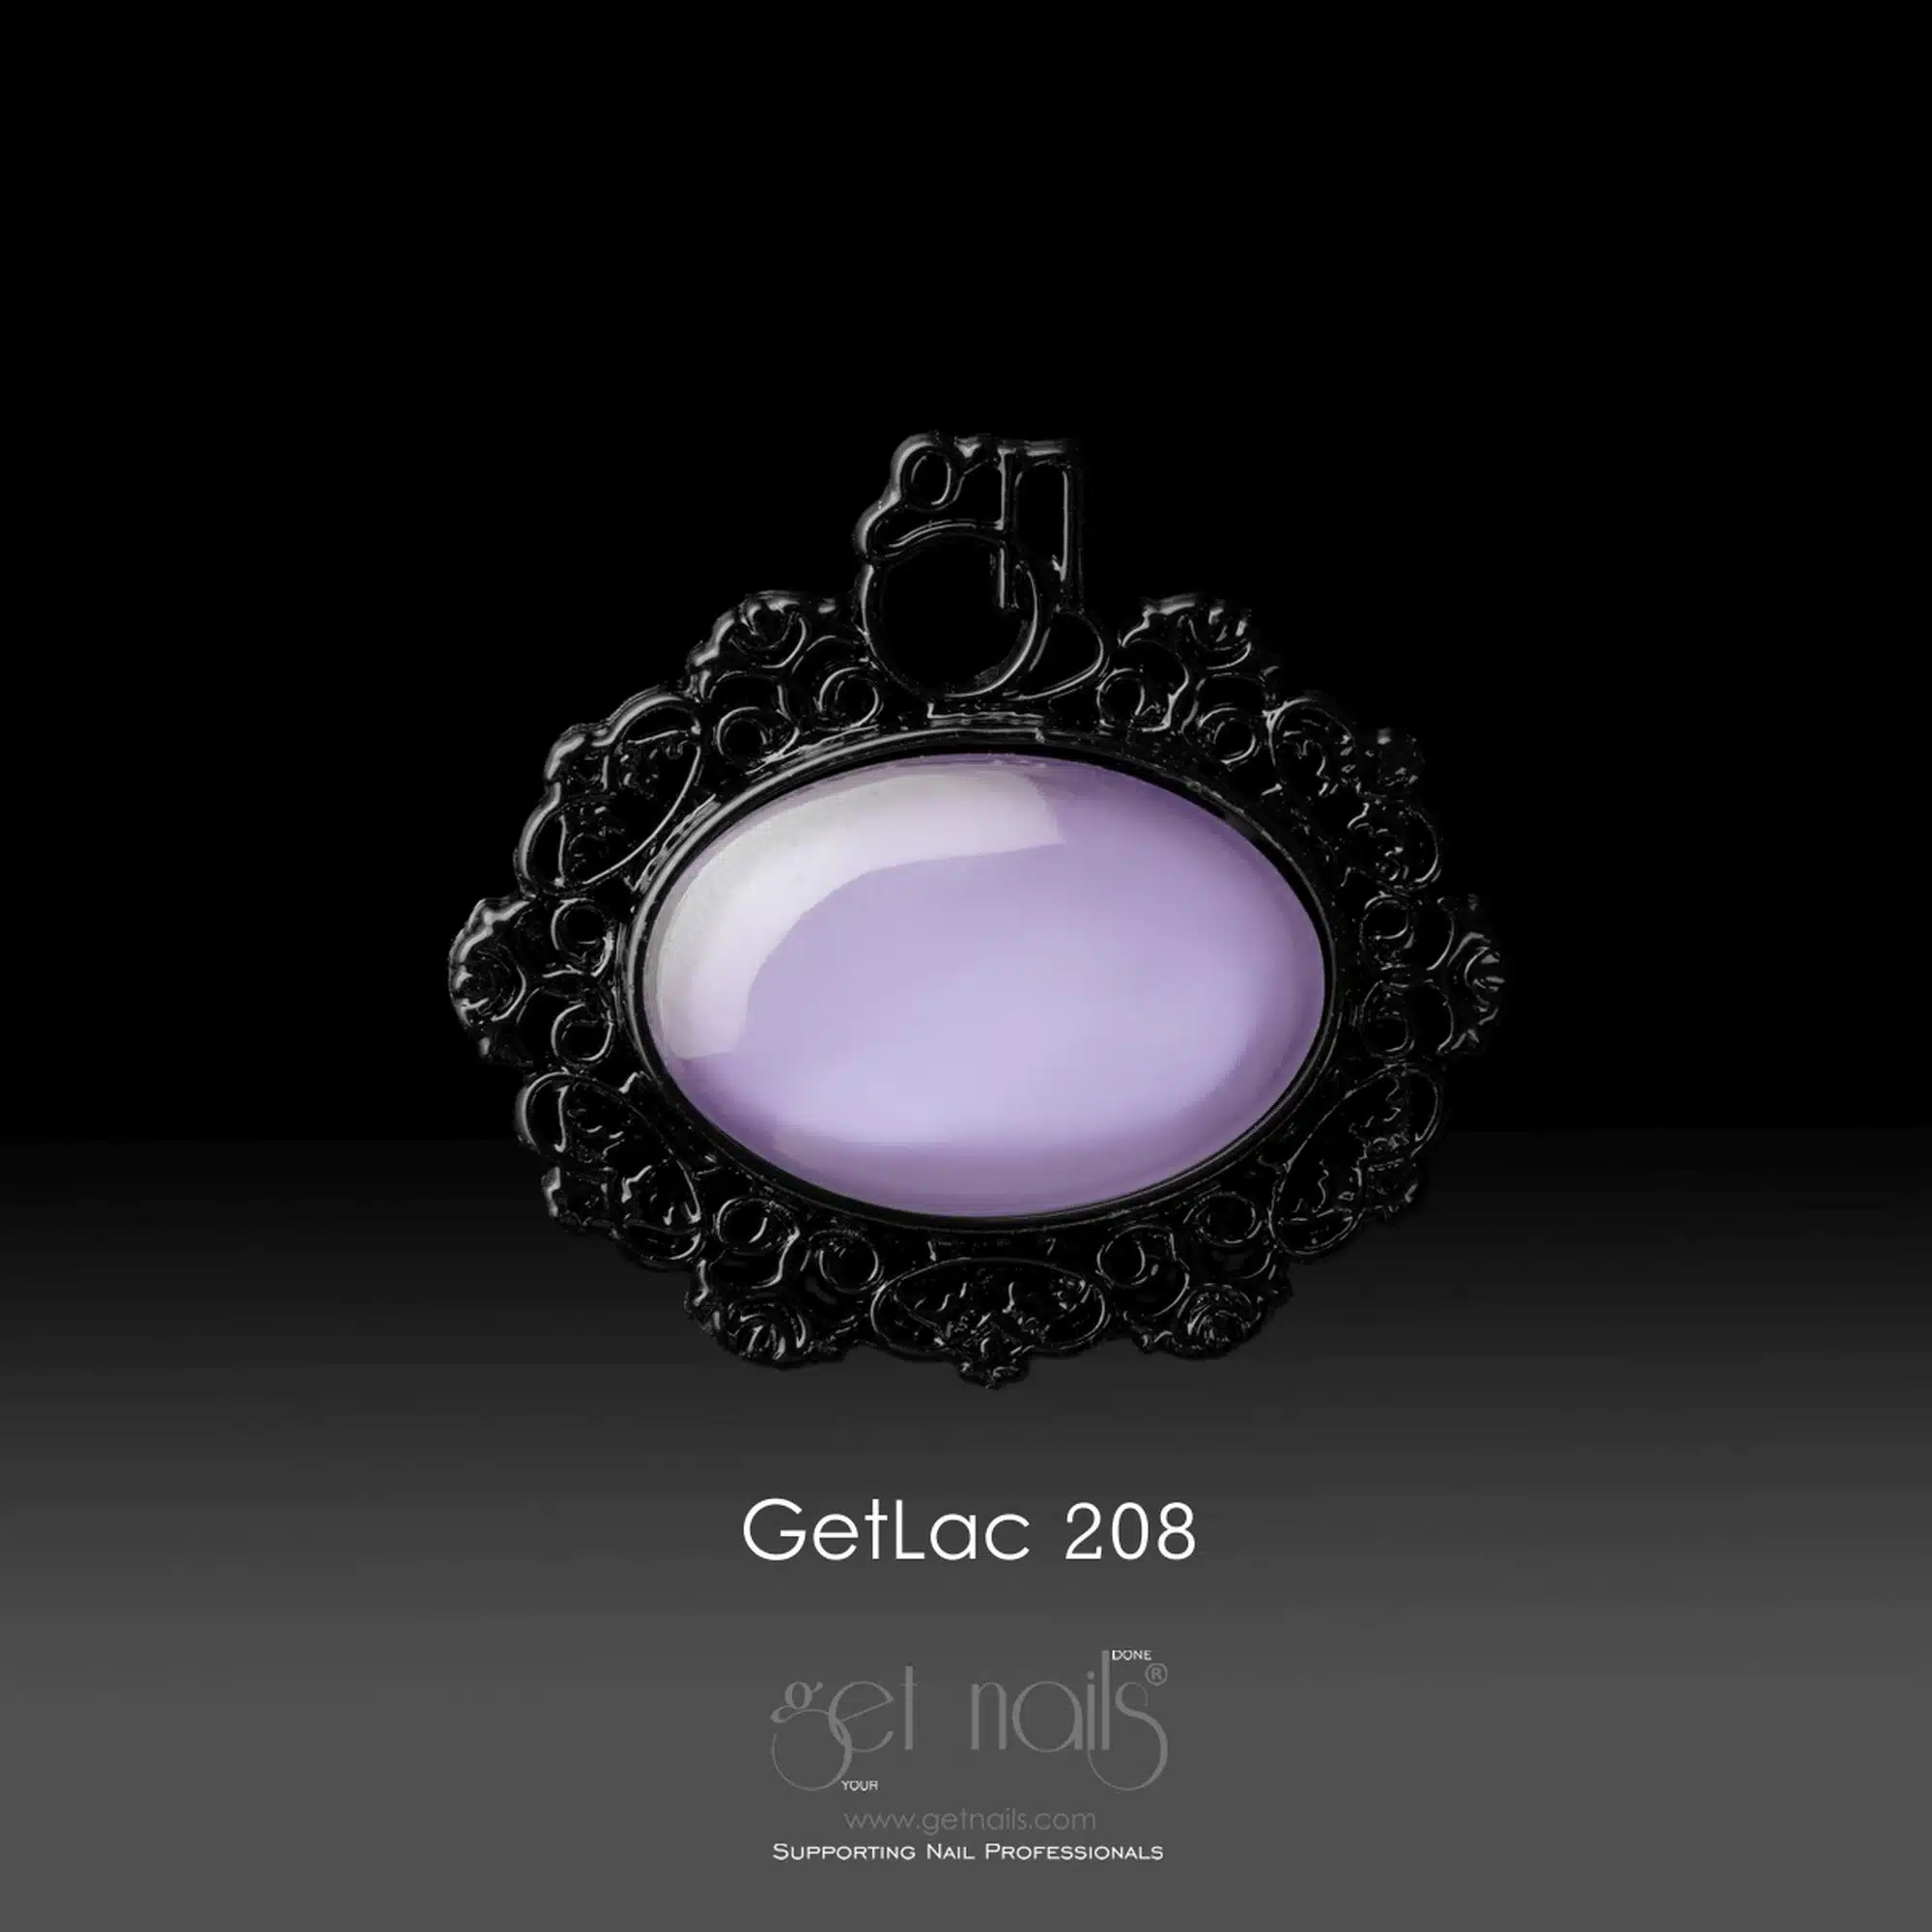 Get Nails Austria - GetLac 208 Lavender Macaroon 15g